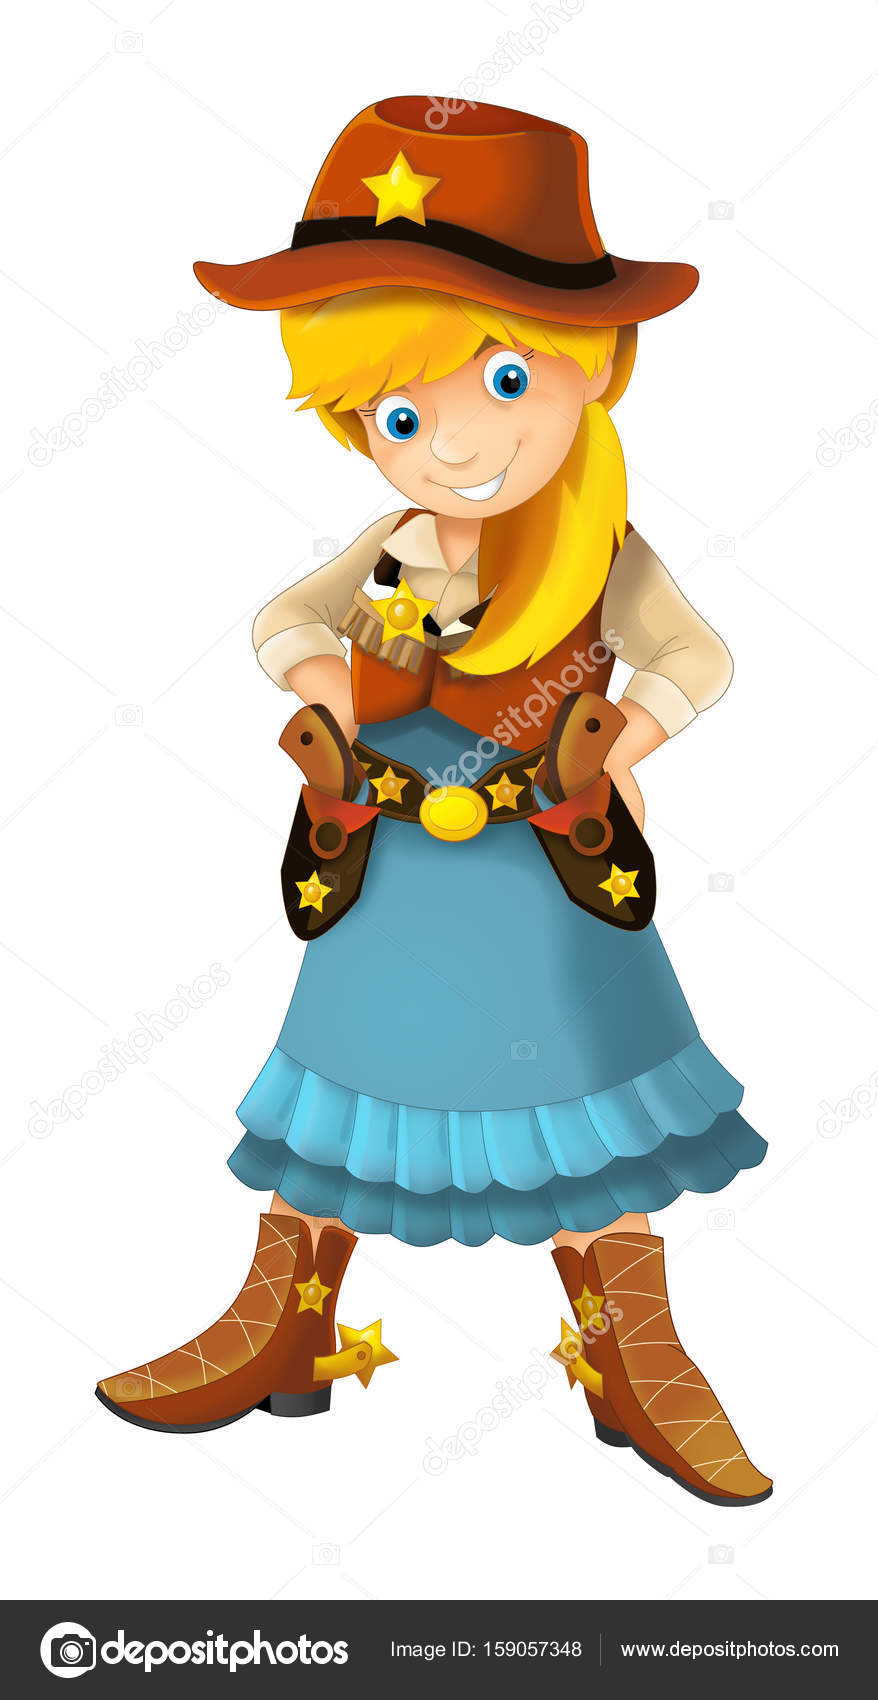 Wild West Cartoon Cowboy Girl With Guns Stock Photo C Agaes8080 159057348